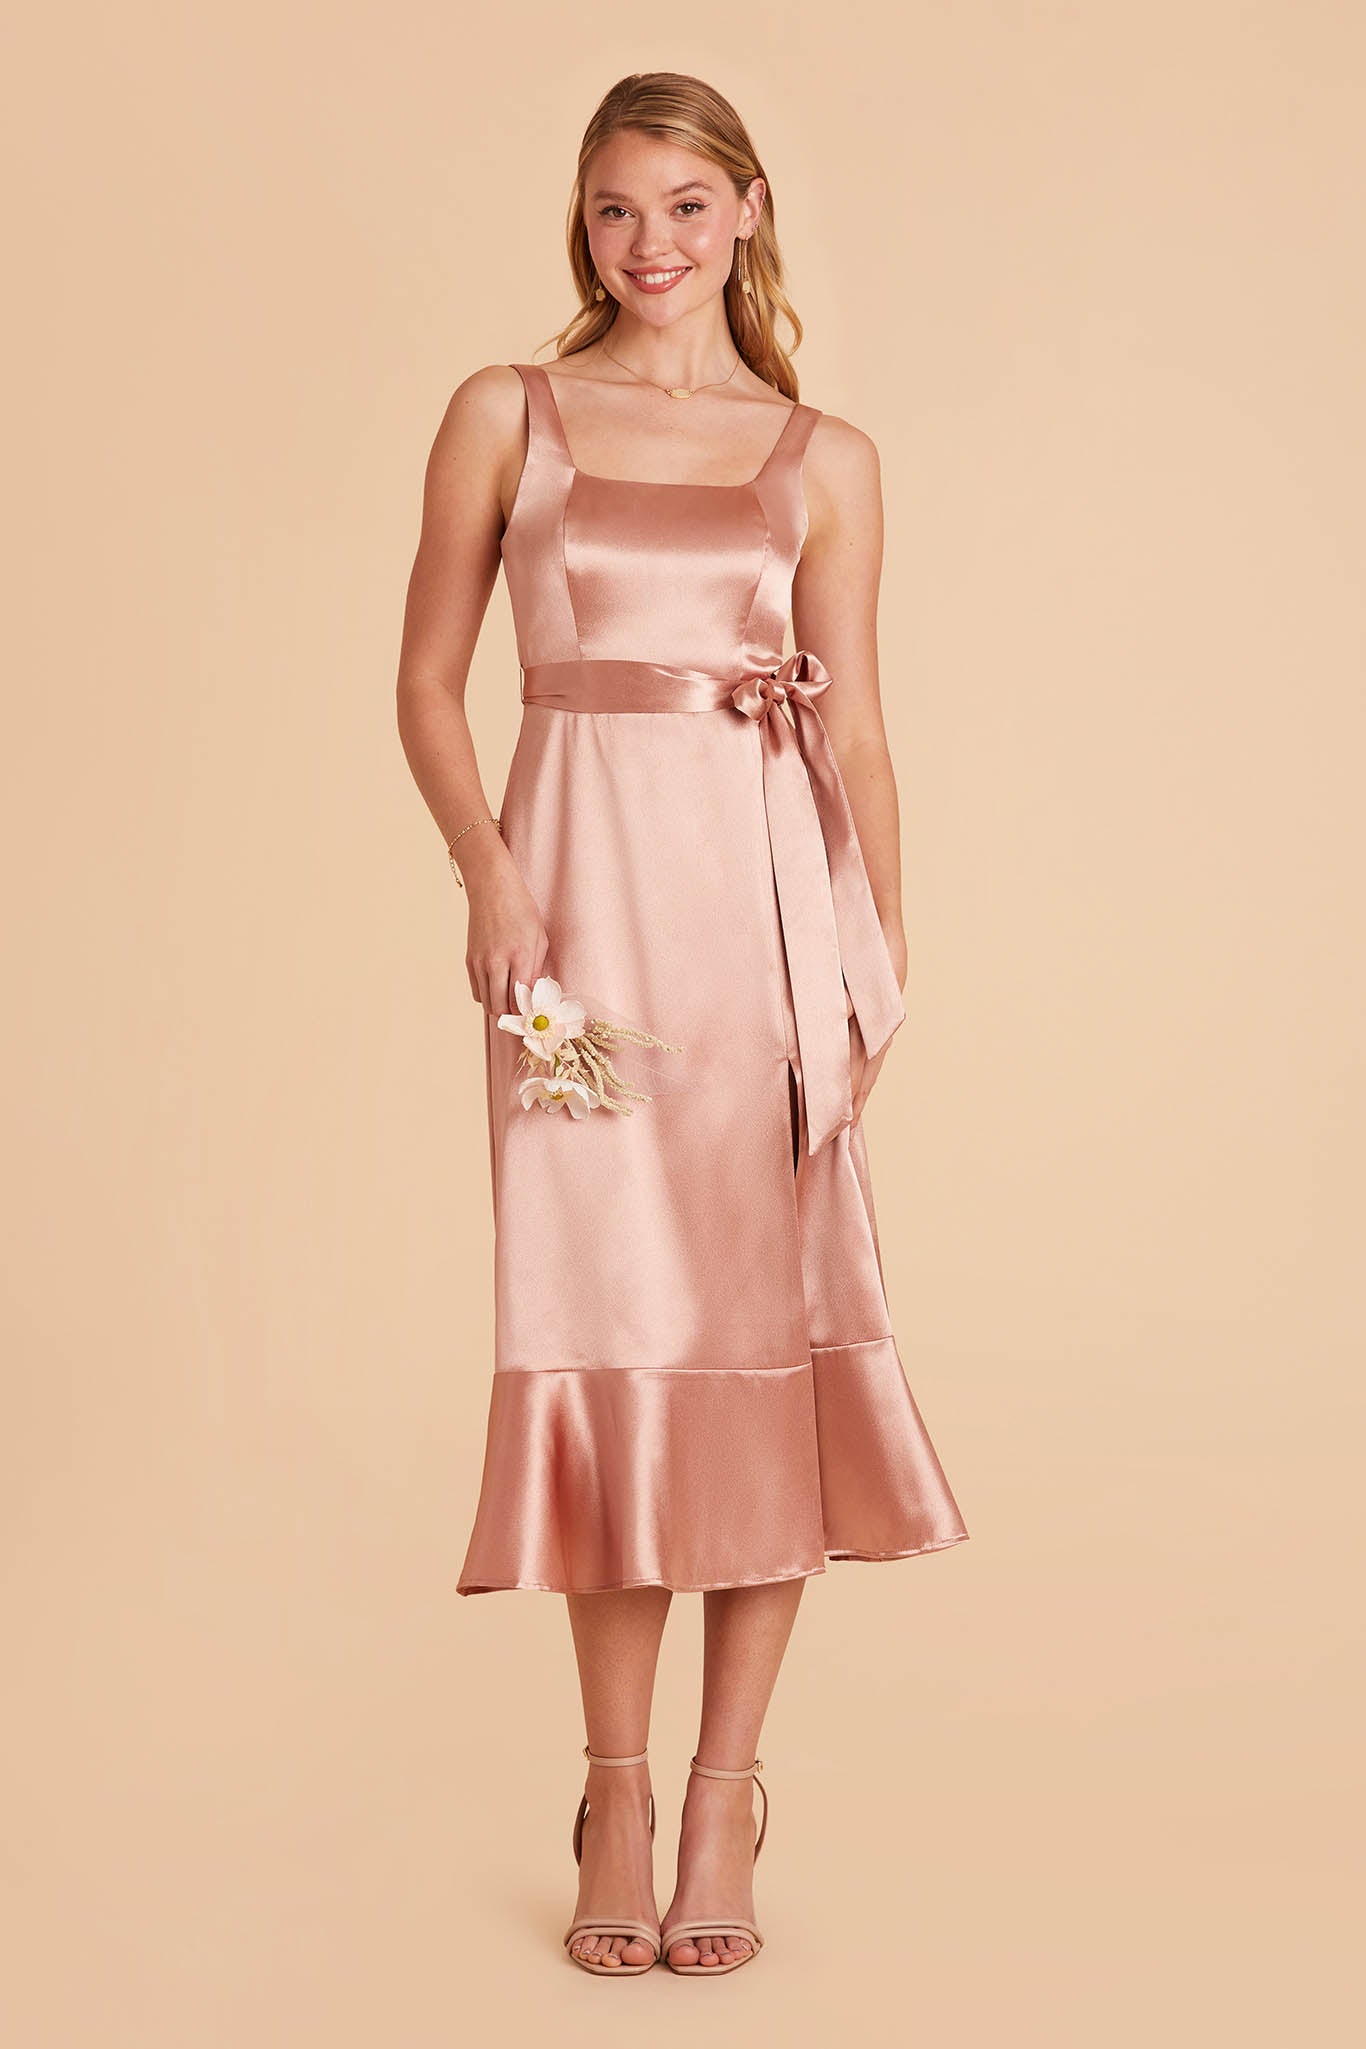 rose gold pink satin convertible pinafore-style midi bridesmaid dress with bow and ruffles